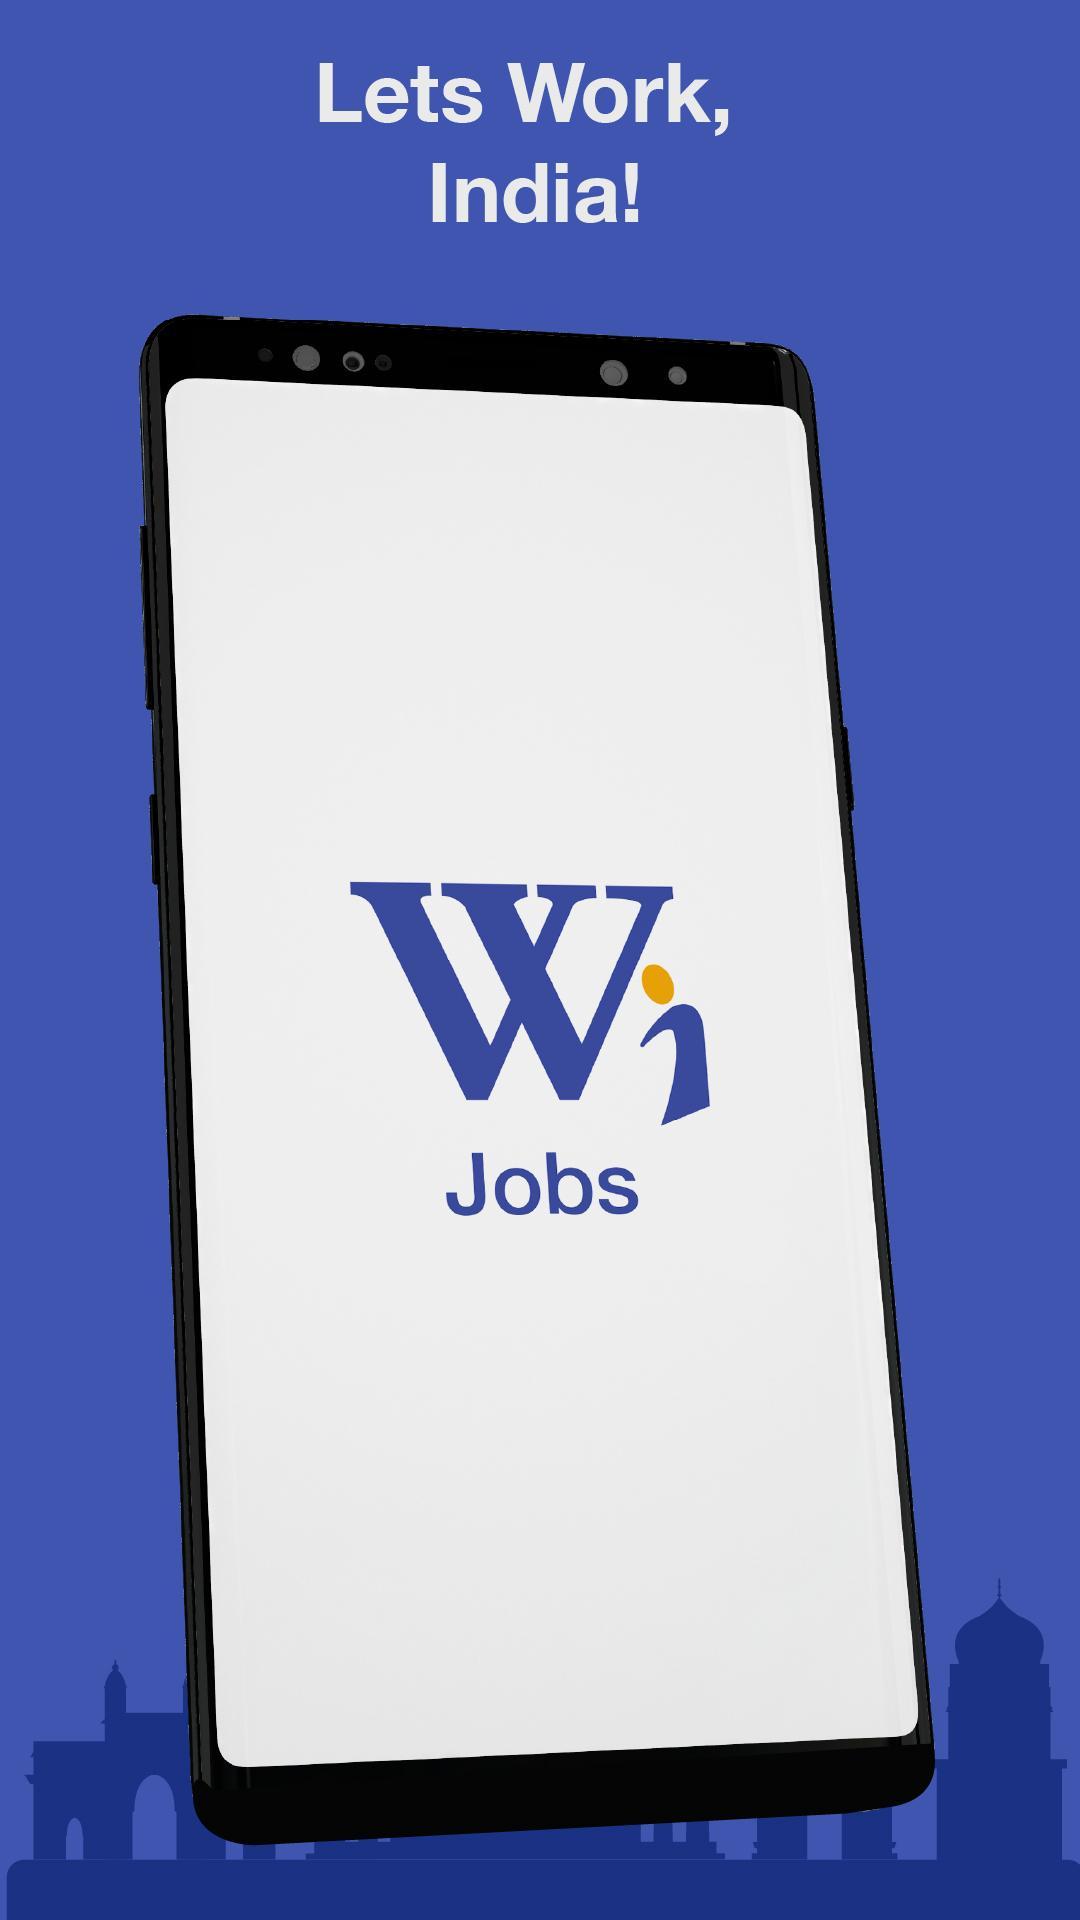 WorkIndia Job Search App - Free HR contact direct 7.0.0.2 Screenshot 6